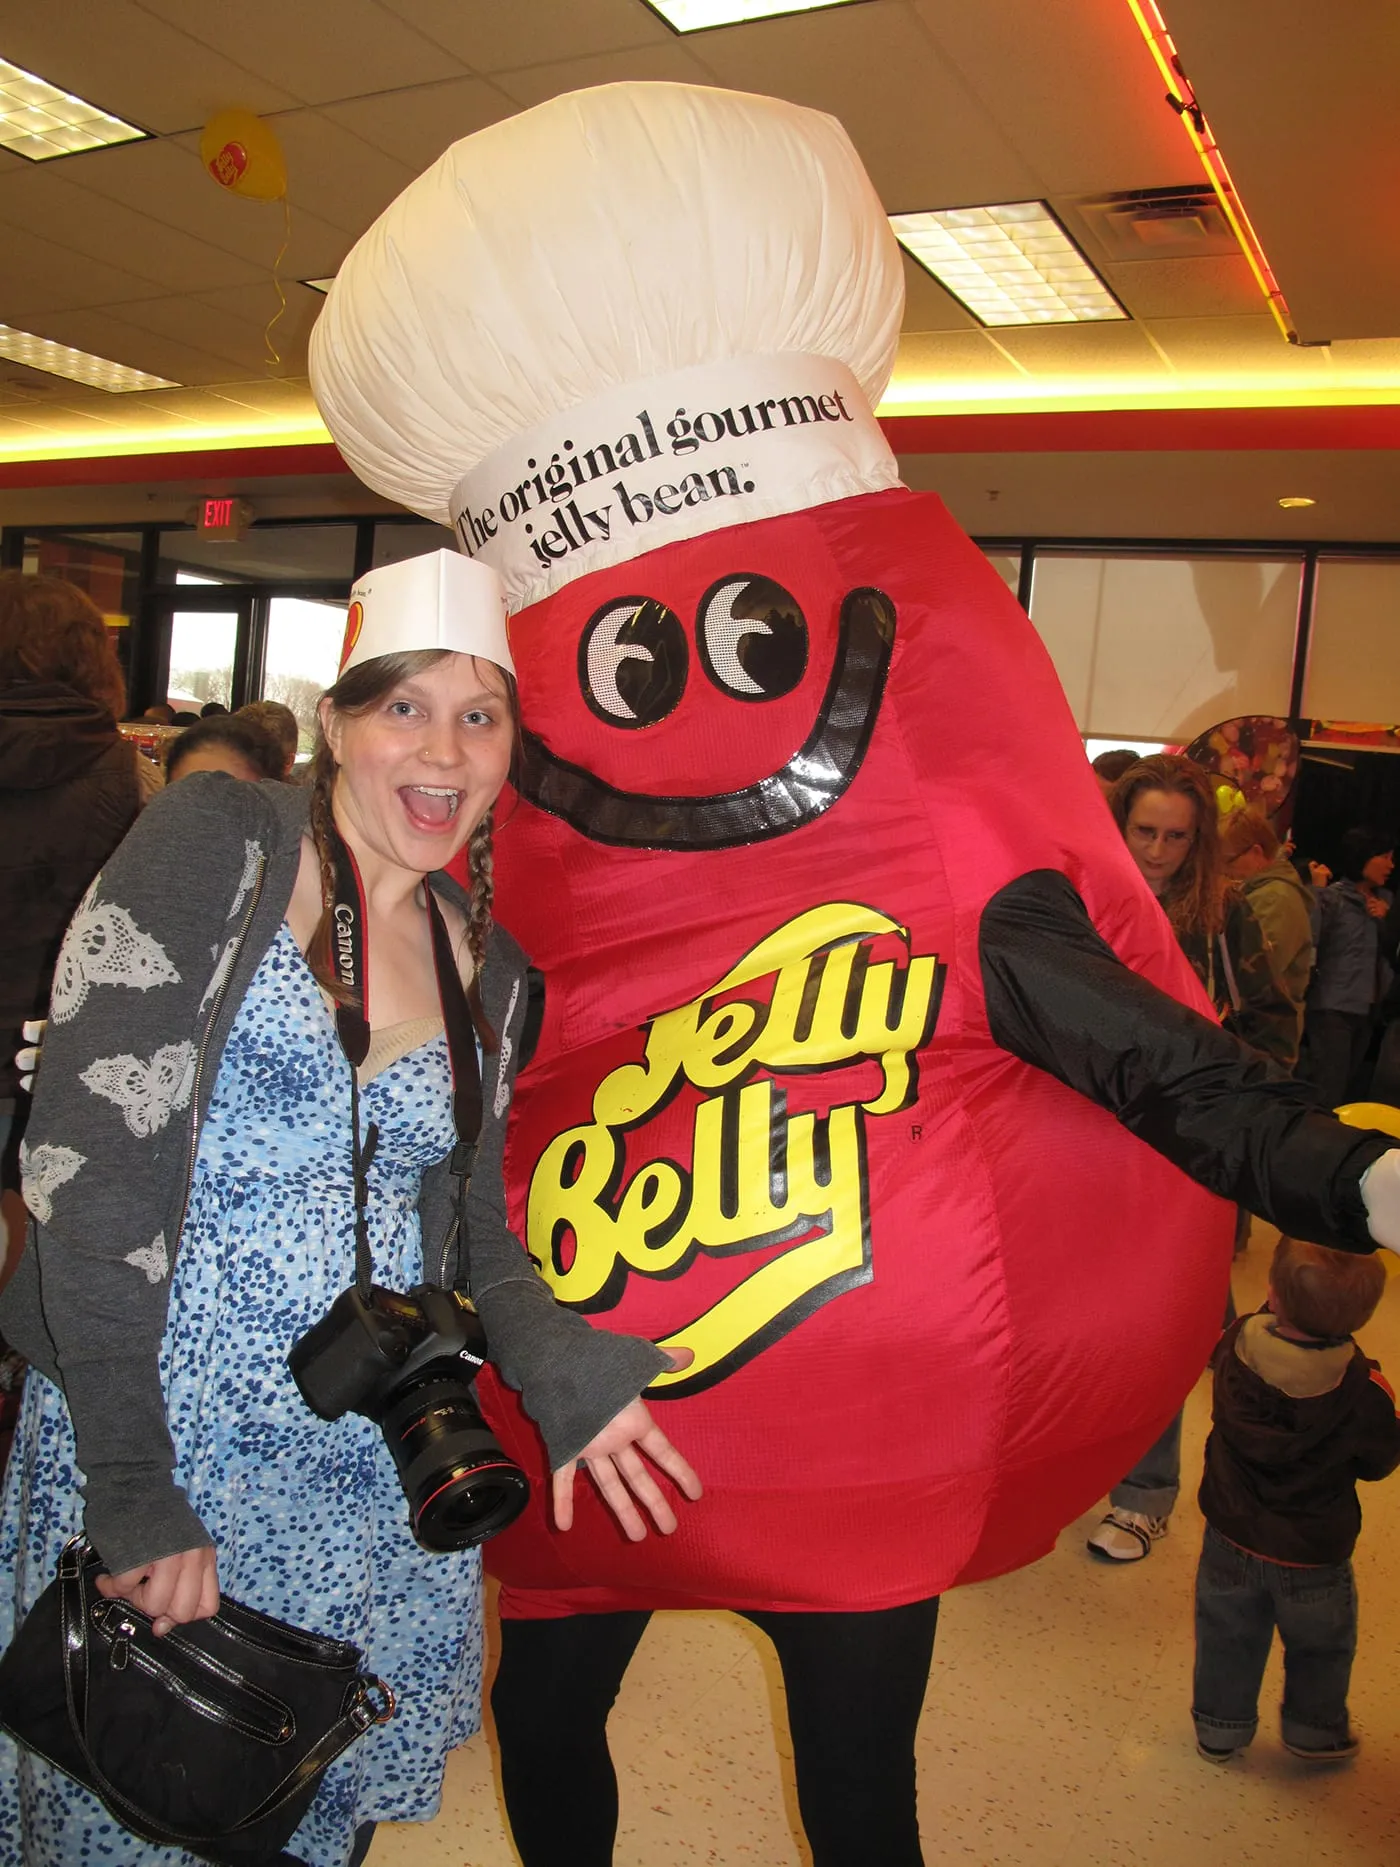 Jelly Belly Center Tour in Pleasant Prairie, Wisconsin